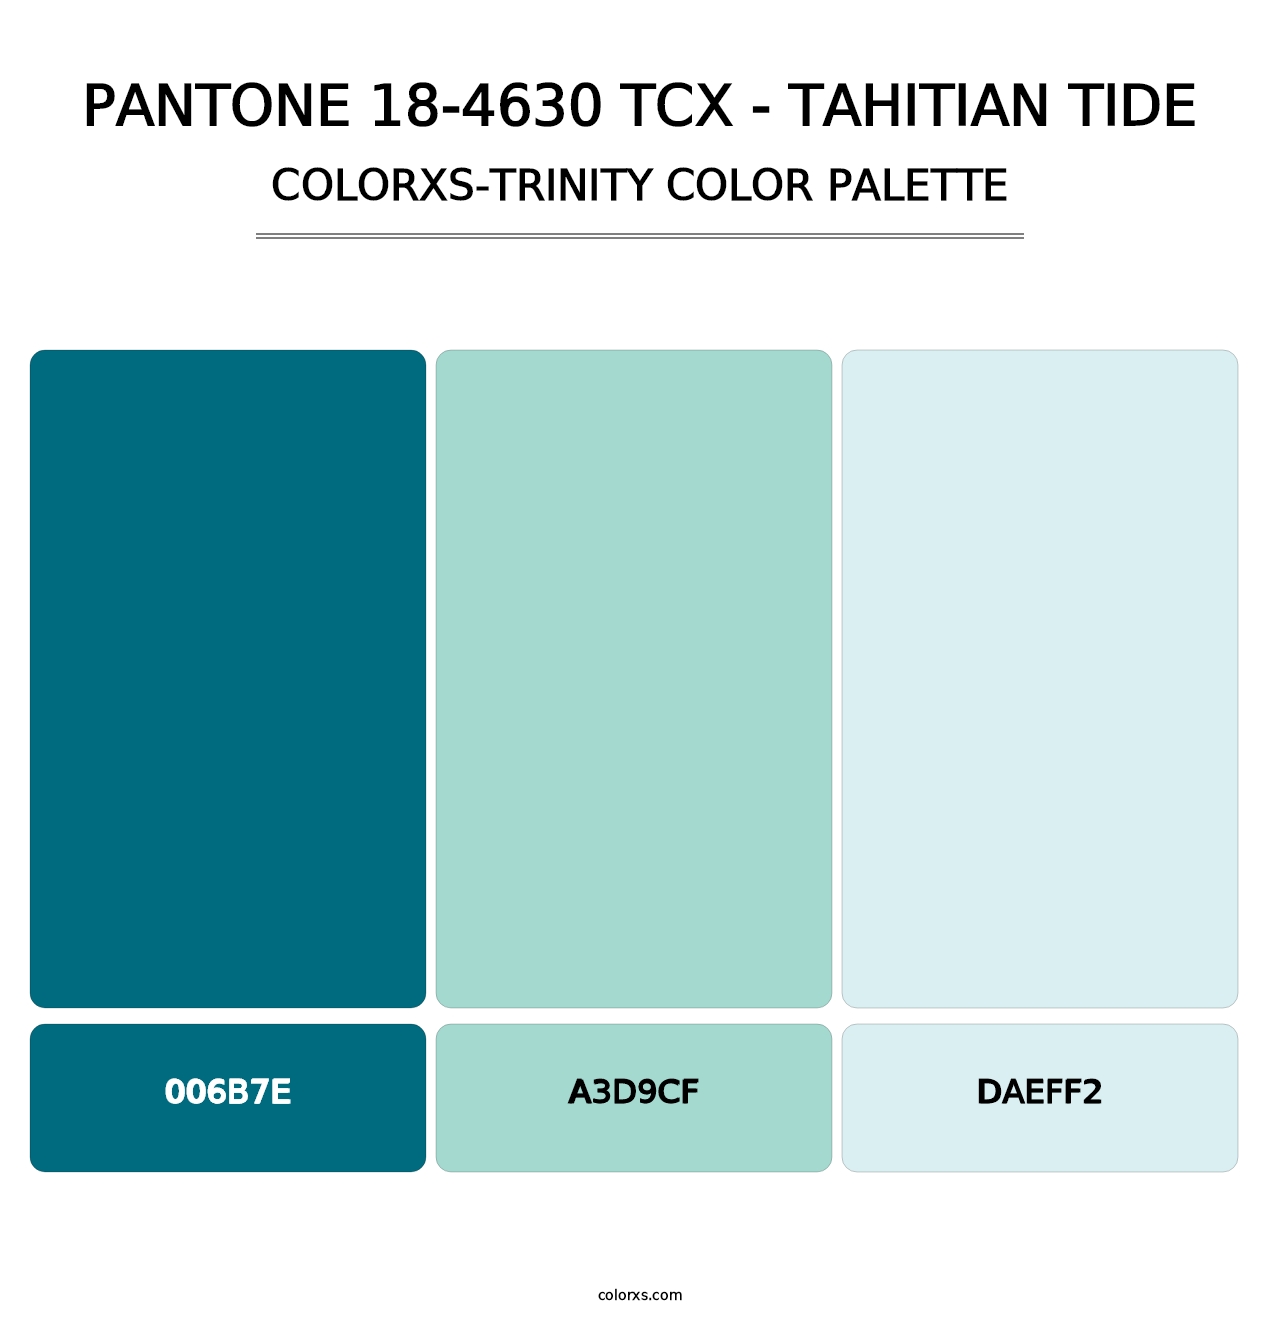 PANTONE 18-4630 TCX - Tahitian Tide - Colorxs Trinity Palette